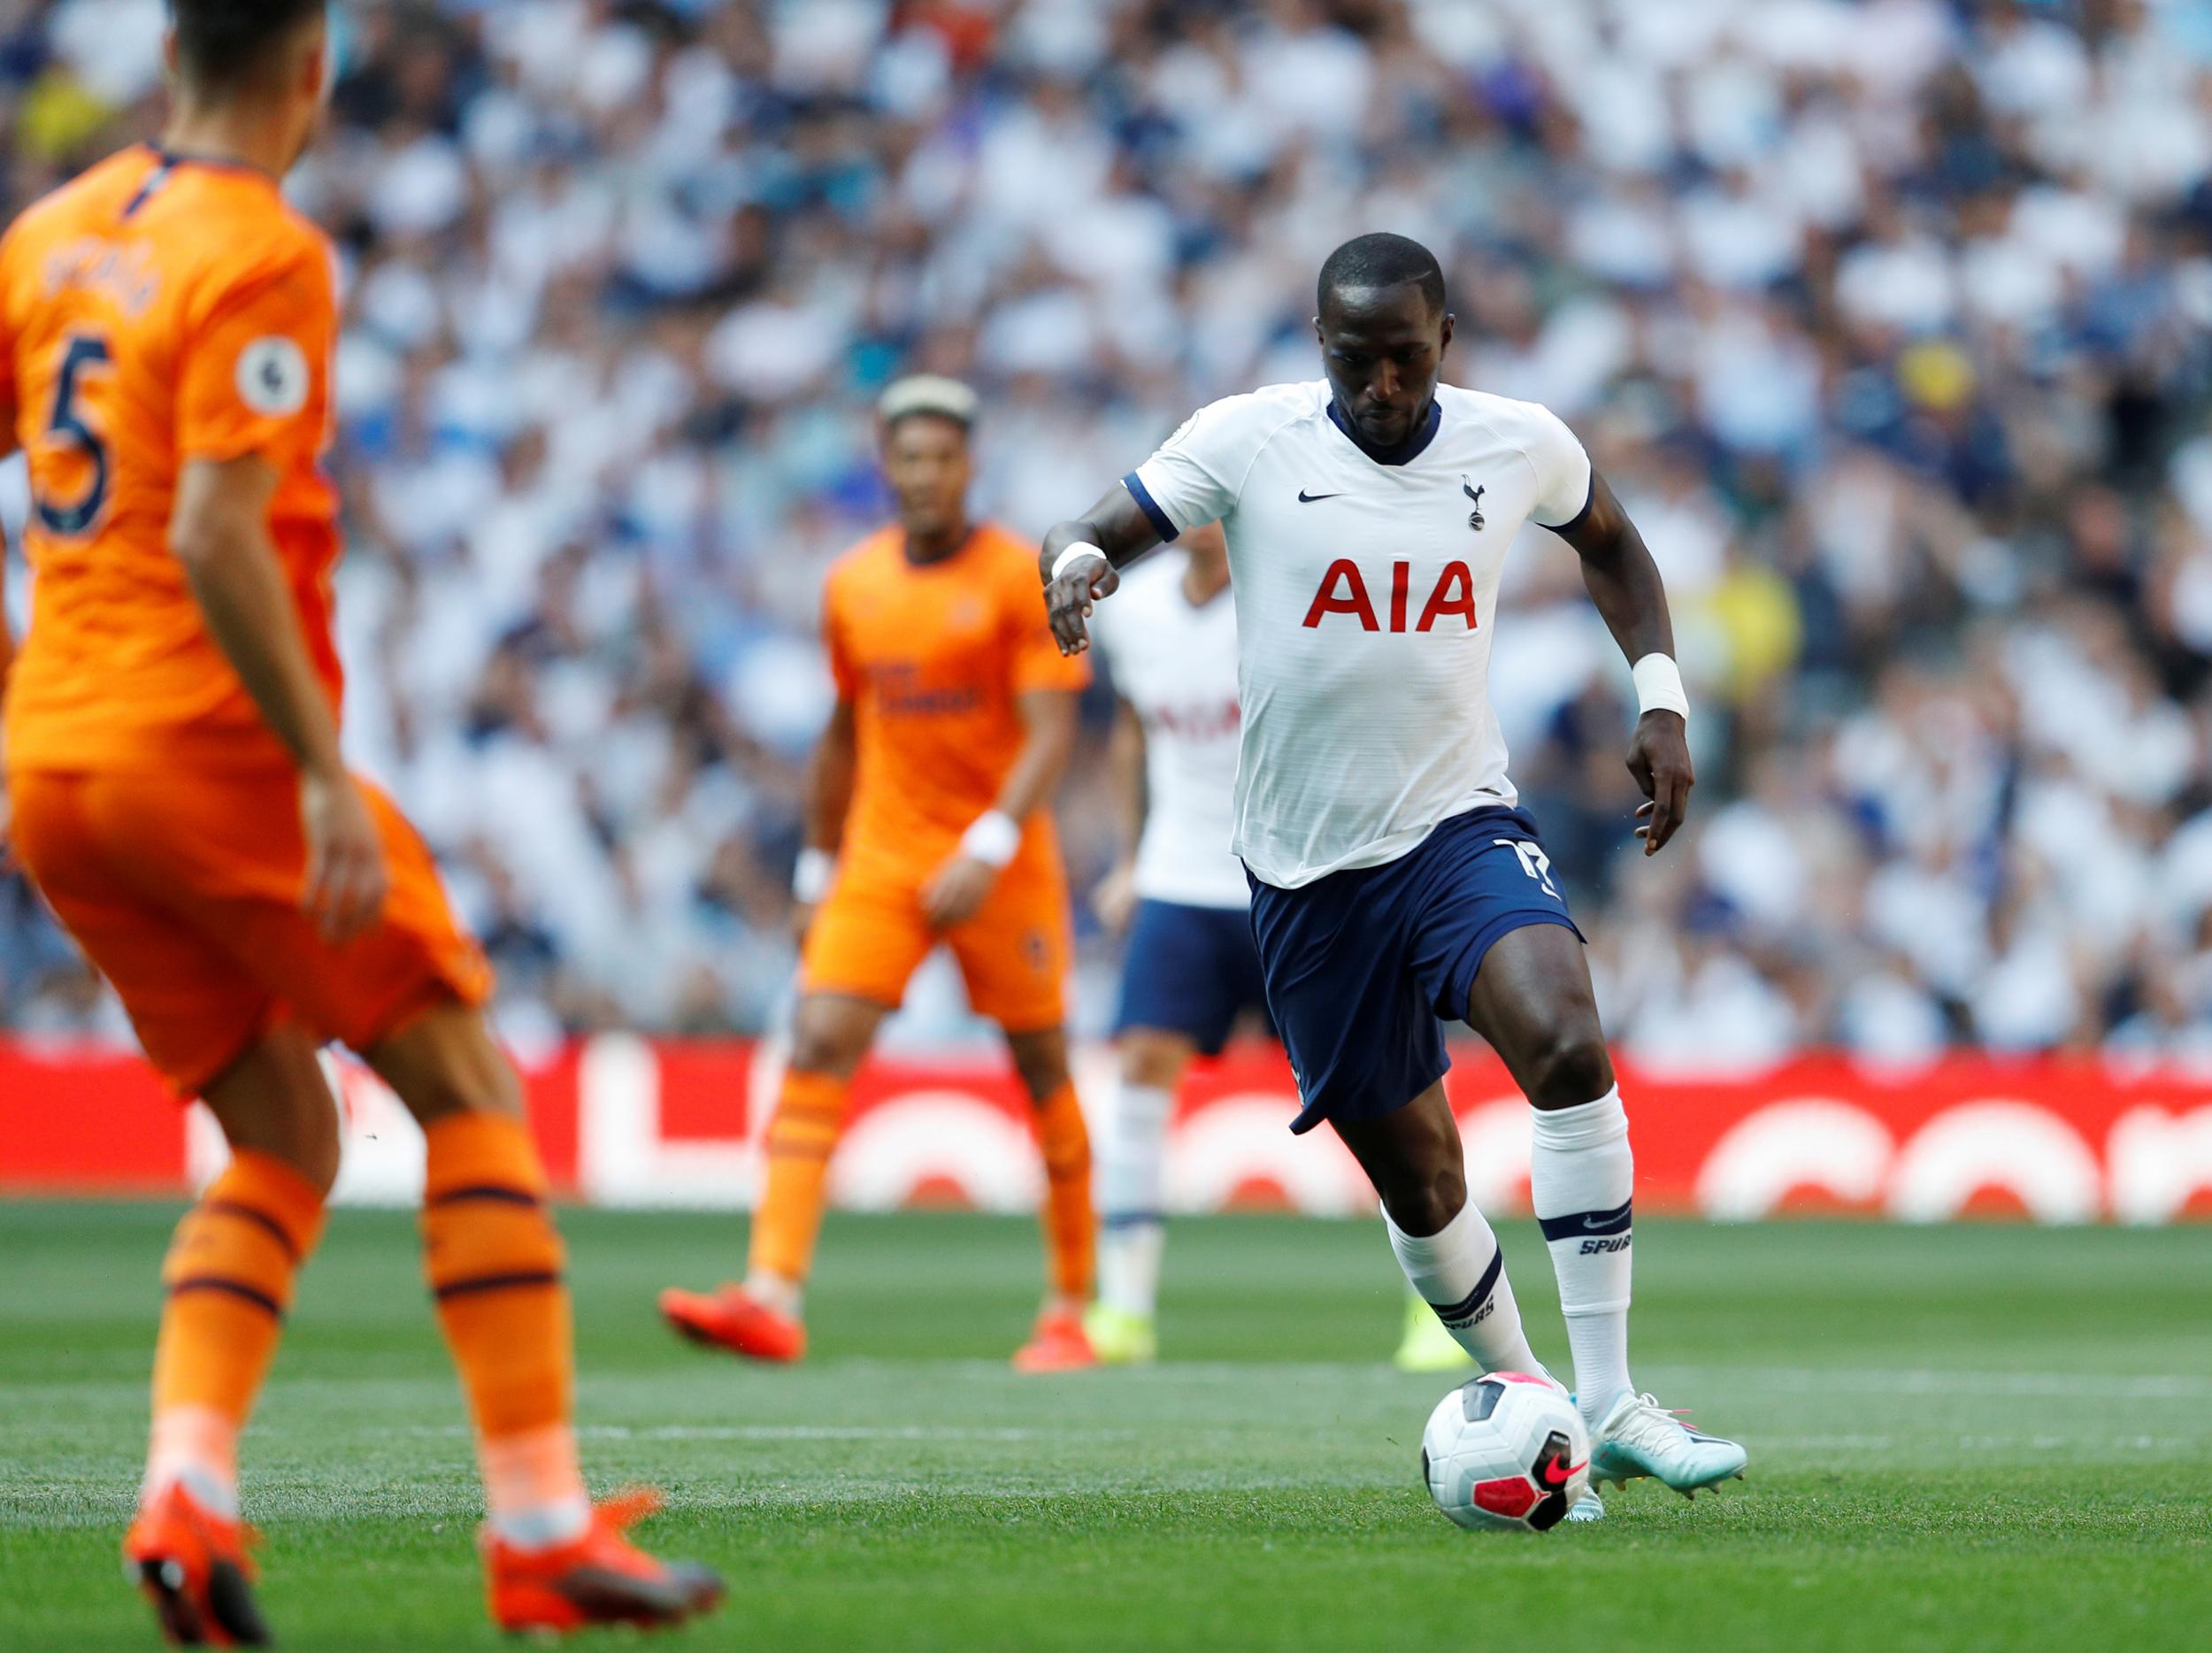 Tottenham vs Newcastle LIVE: Stream, score, goal updates, confirmed line-ups, latest news